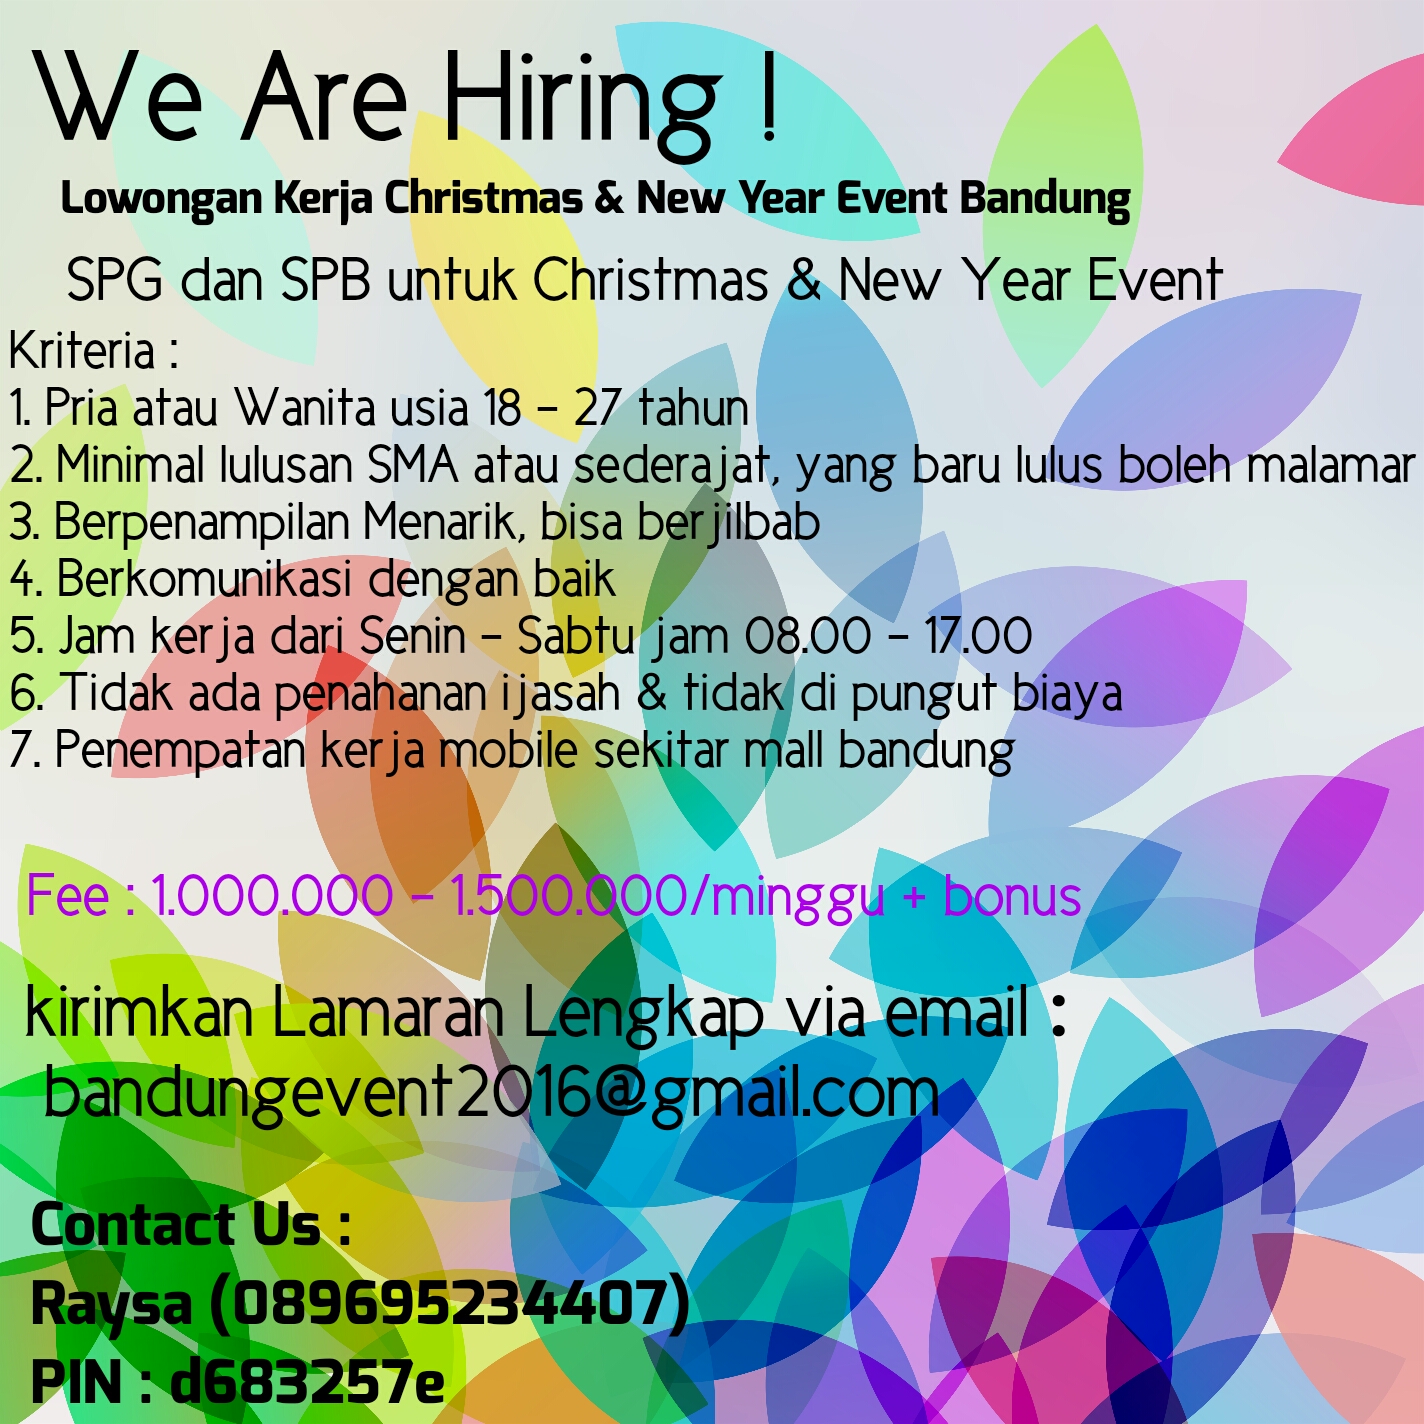 Lowongan Kerja Christmas & New Year Event Bandung - Info 